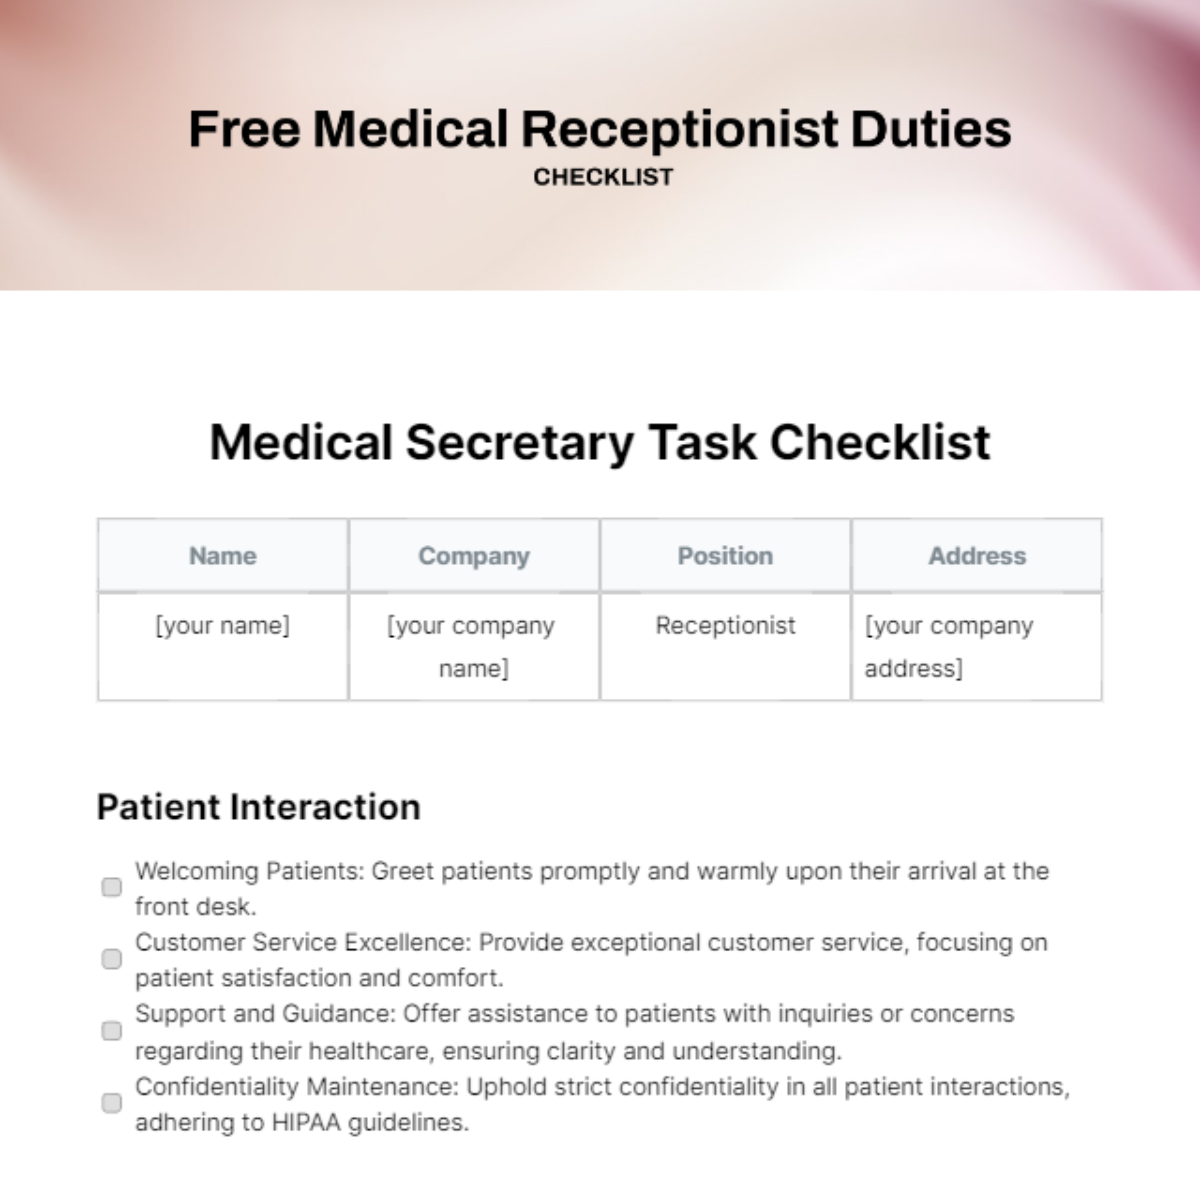 Free Medical Receptionist Duties Checklist Template